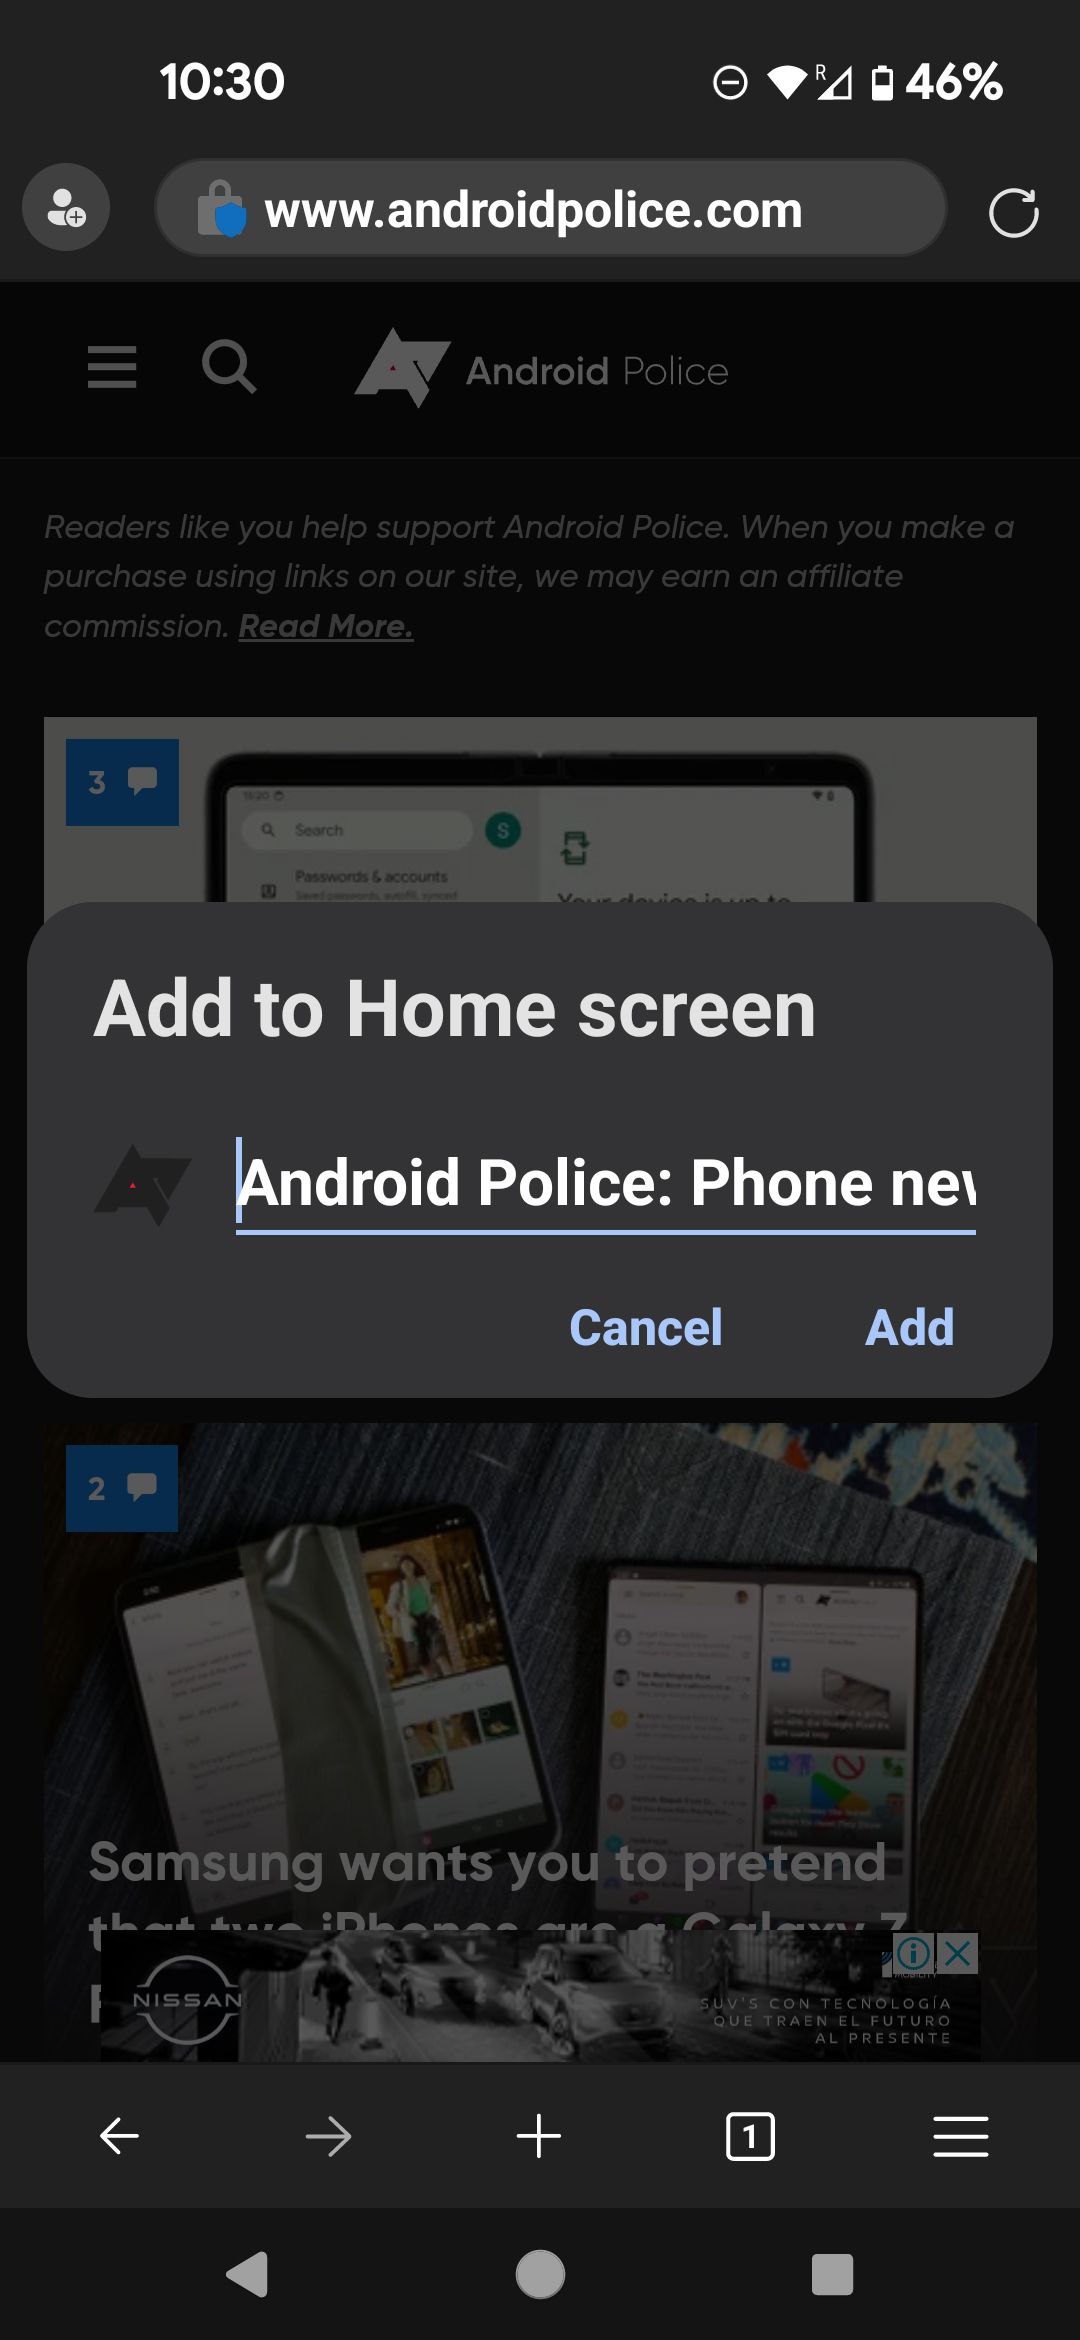 Microsoft Edge mobile Add to Home screen dialogue box